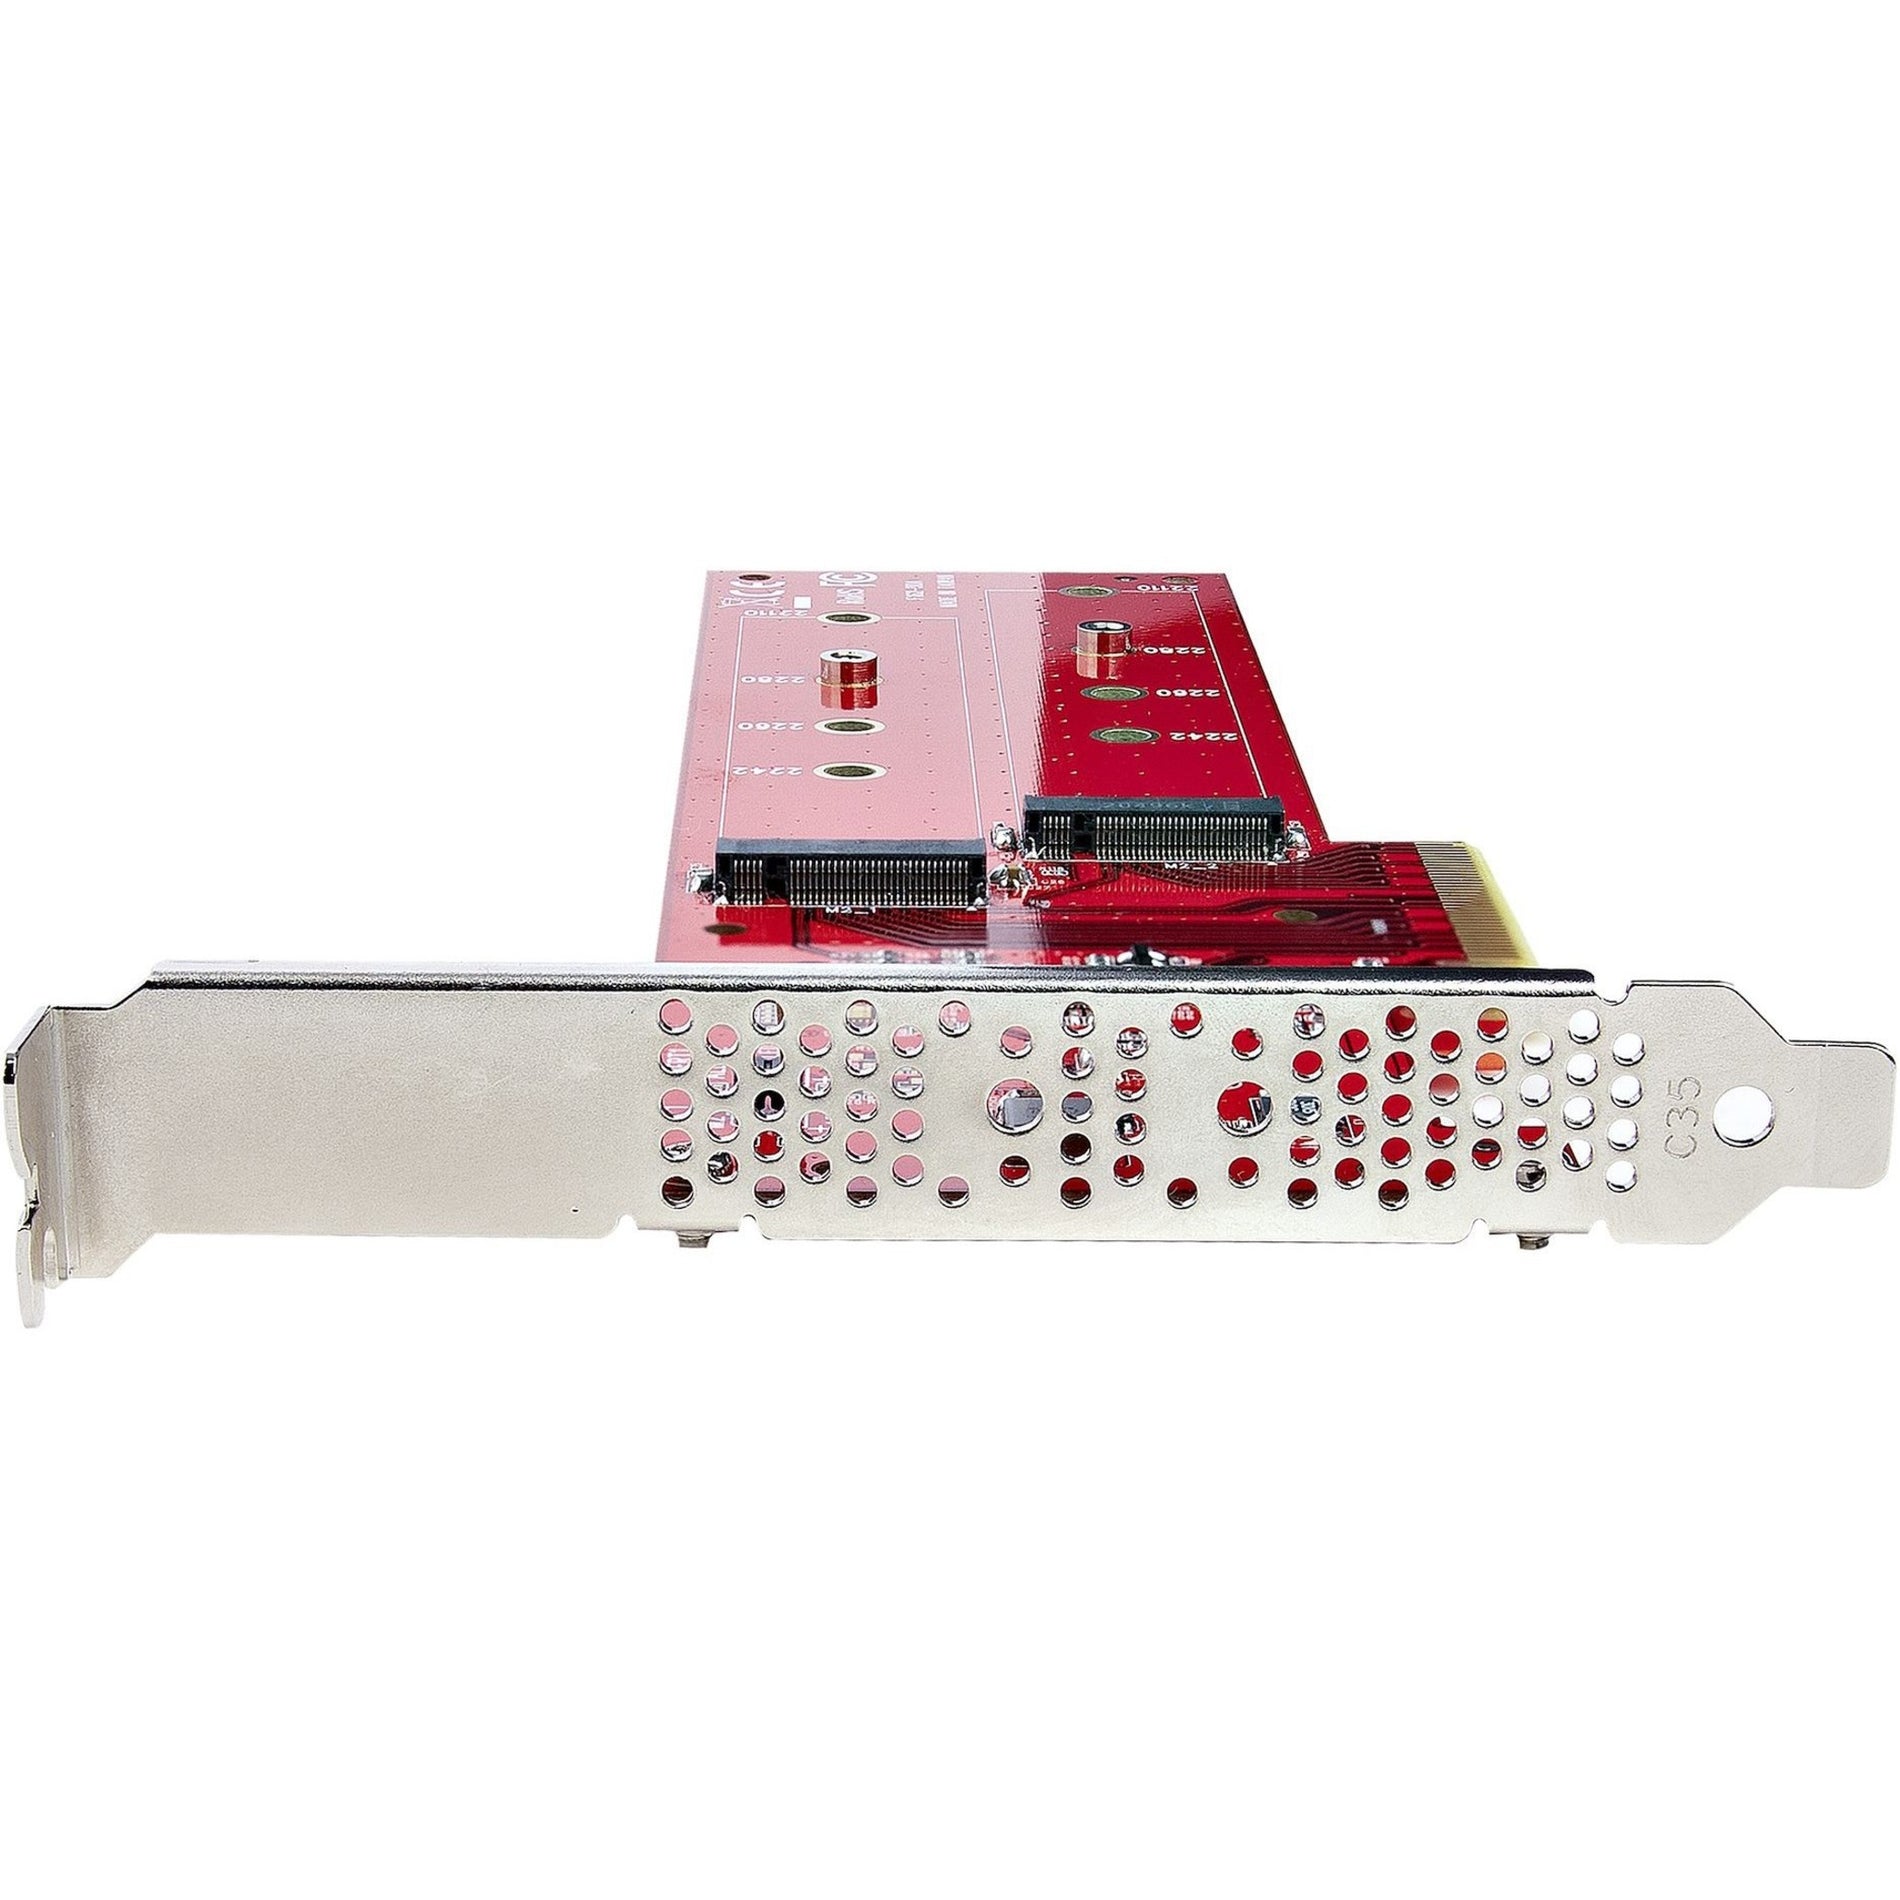 StarTech.com TARJETA DE ADAPTADOR PCIe A M.2 DUAL-M2-PCIE-CARD-B Doble SSD M.2 NVMe o AHCI a PCI Express 4.0 Hasta 7.8GBps/Unidad Se Requiere Bifurcación